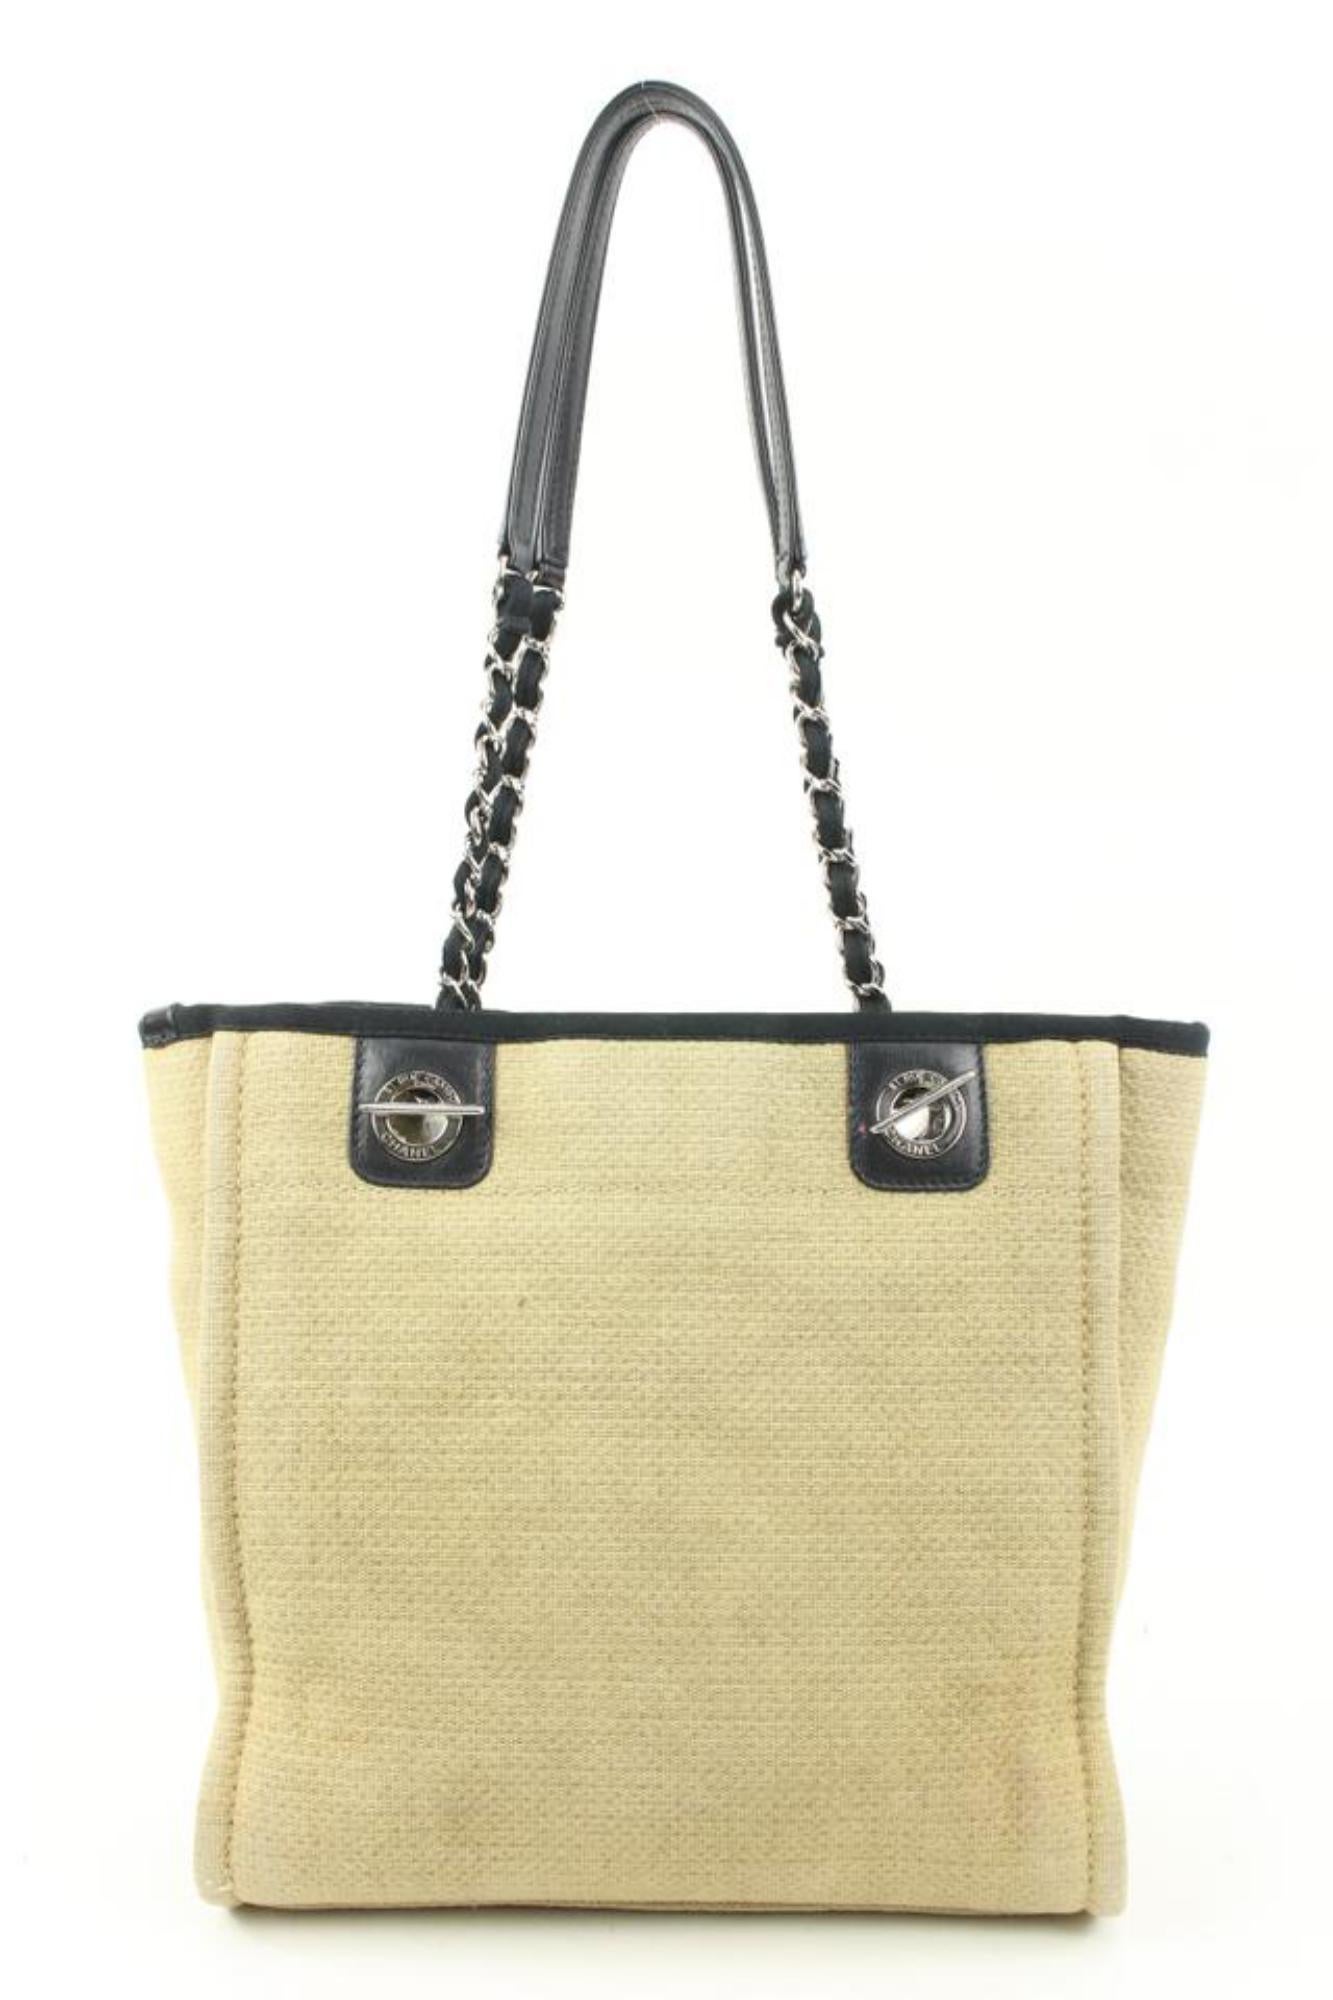 Chanel Beige Deauville PM Chain Tote Bag 51c128s 4